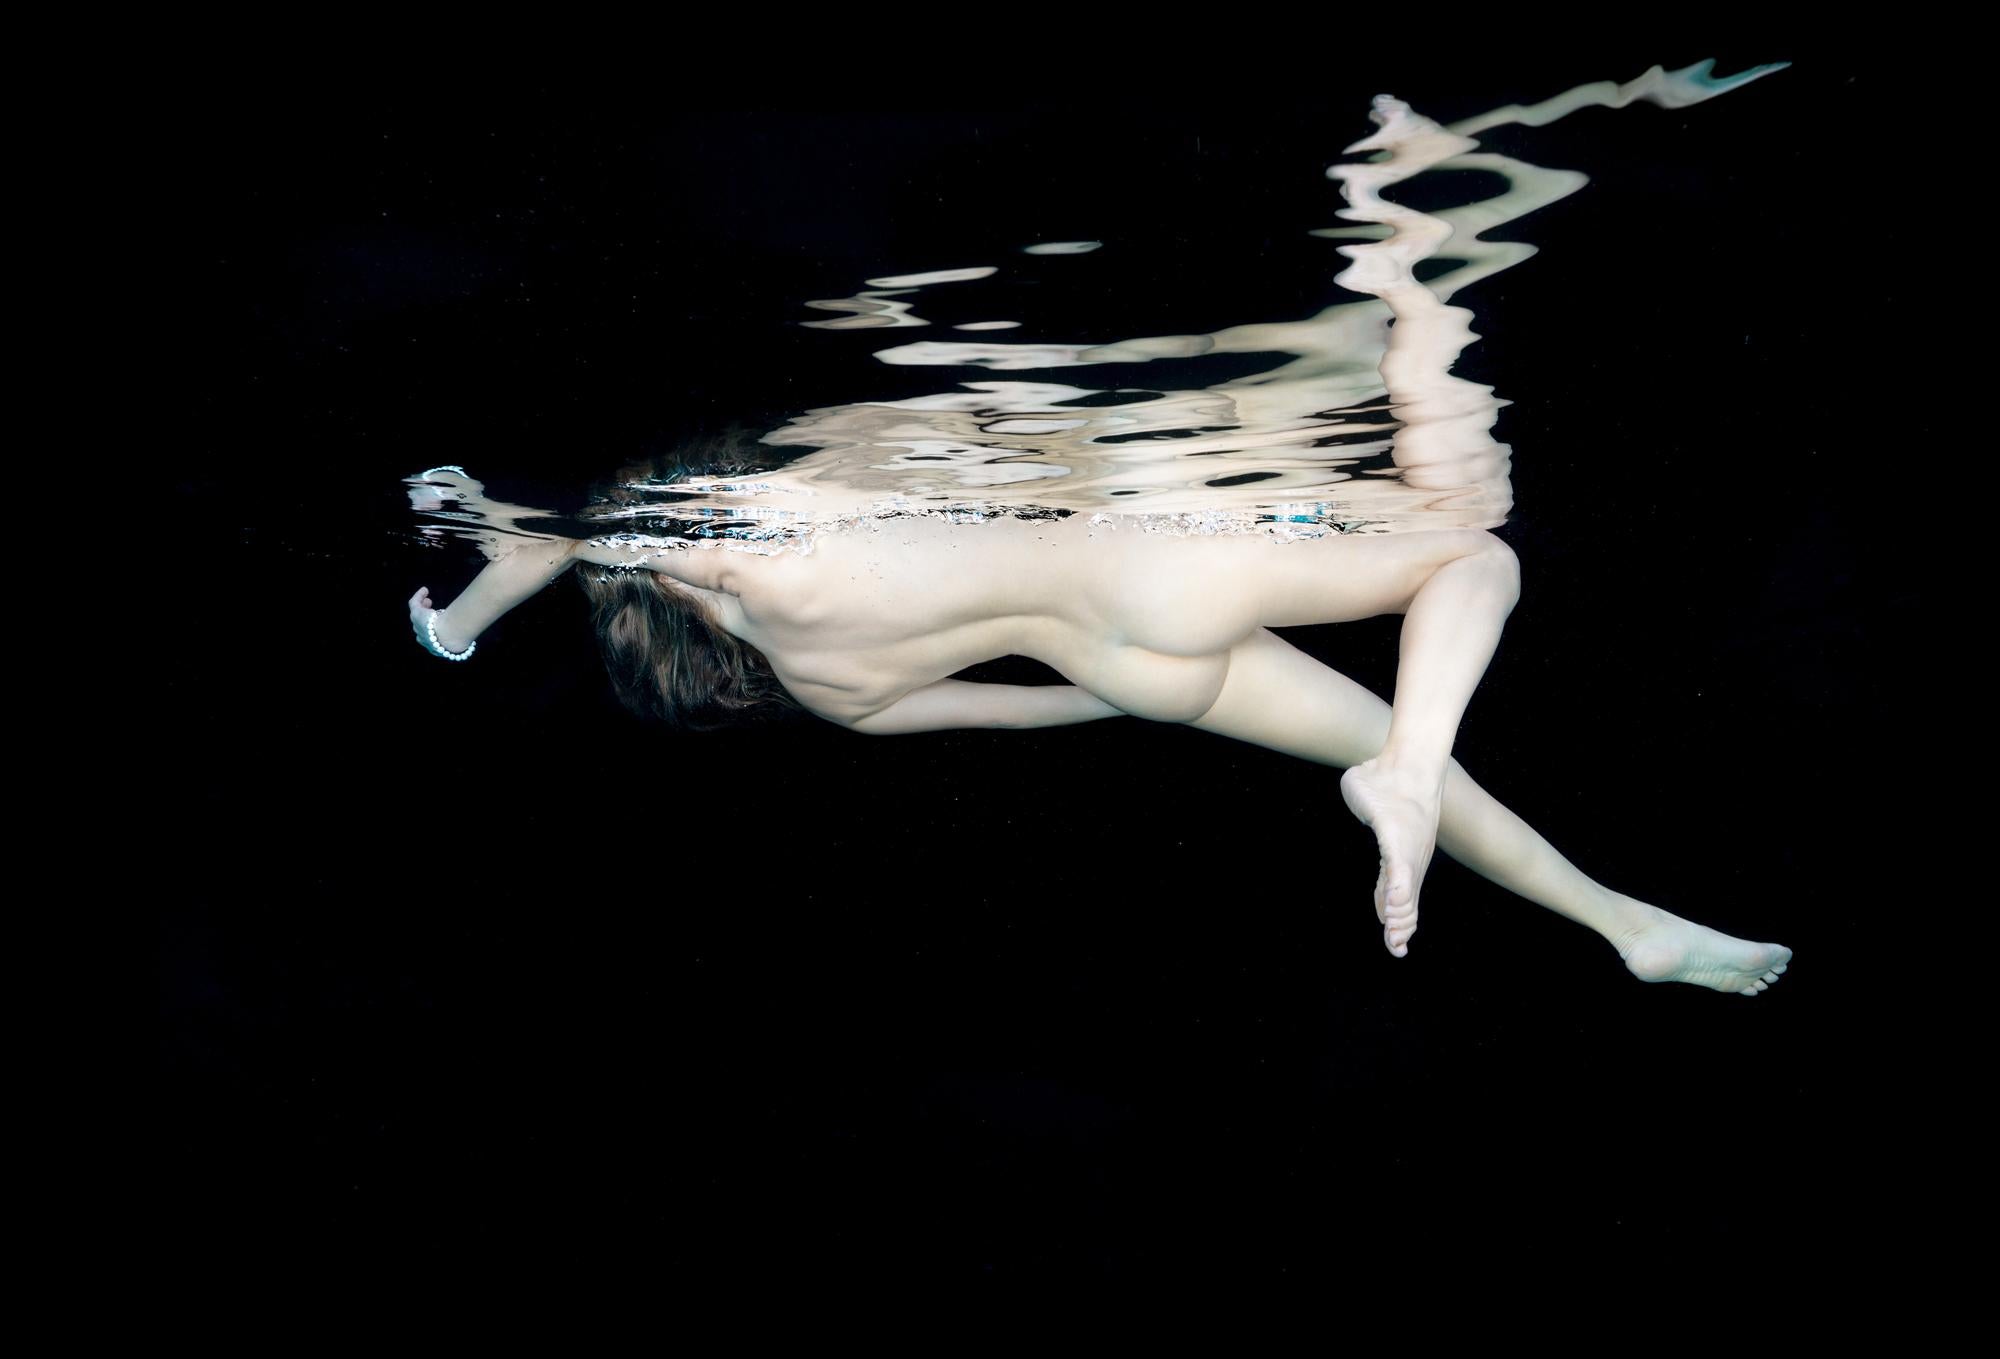 Alex Sher Figurative Photograph - Porcelain II  - underwater nude photograph - print on paper 18" х 24"